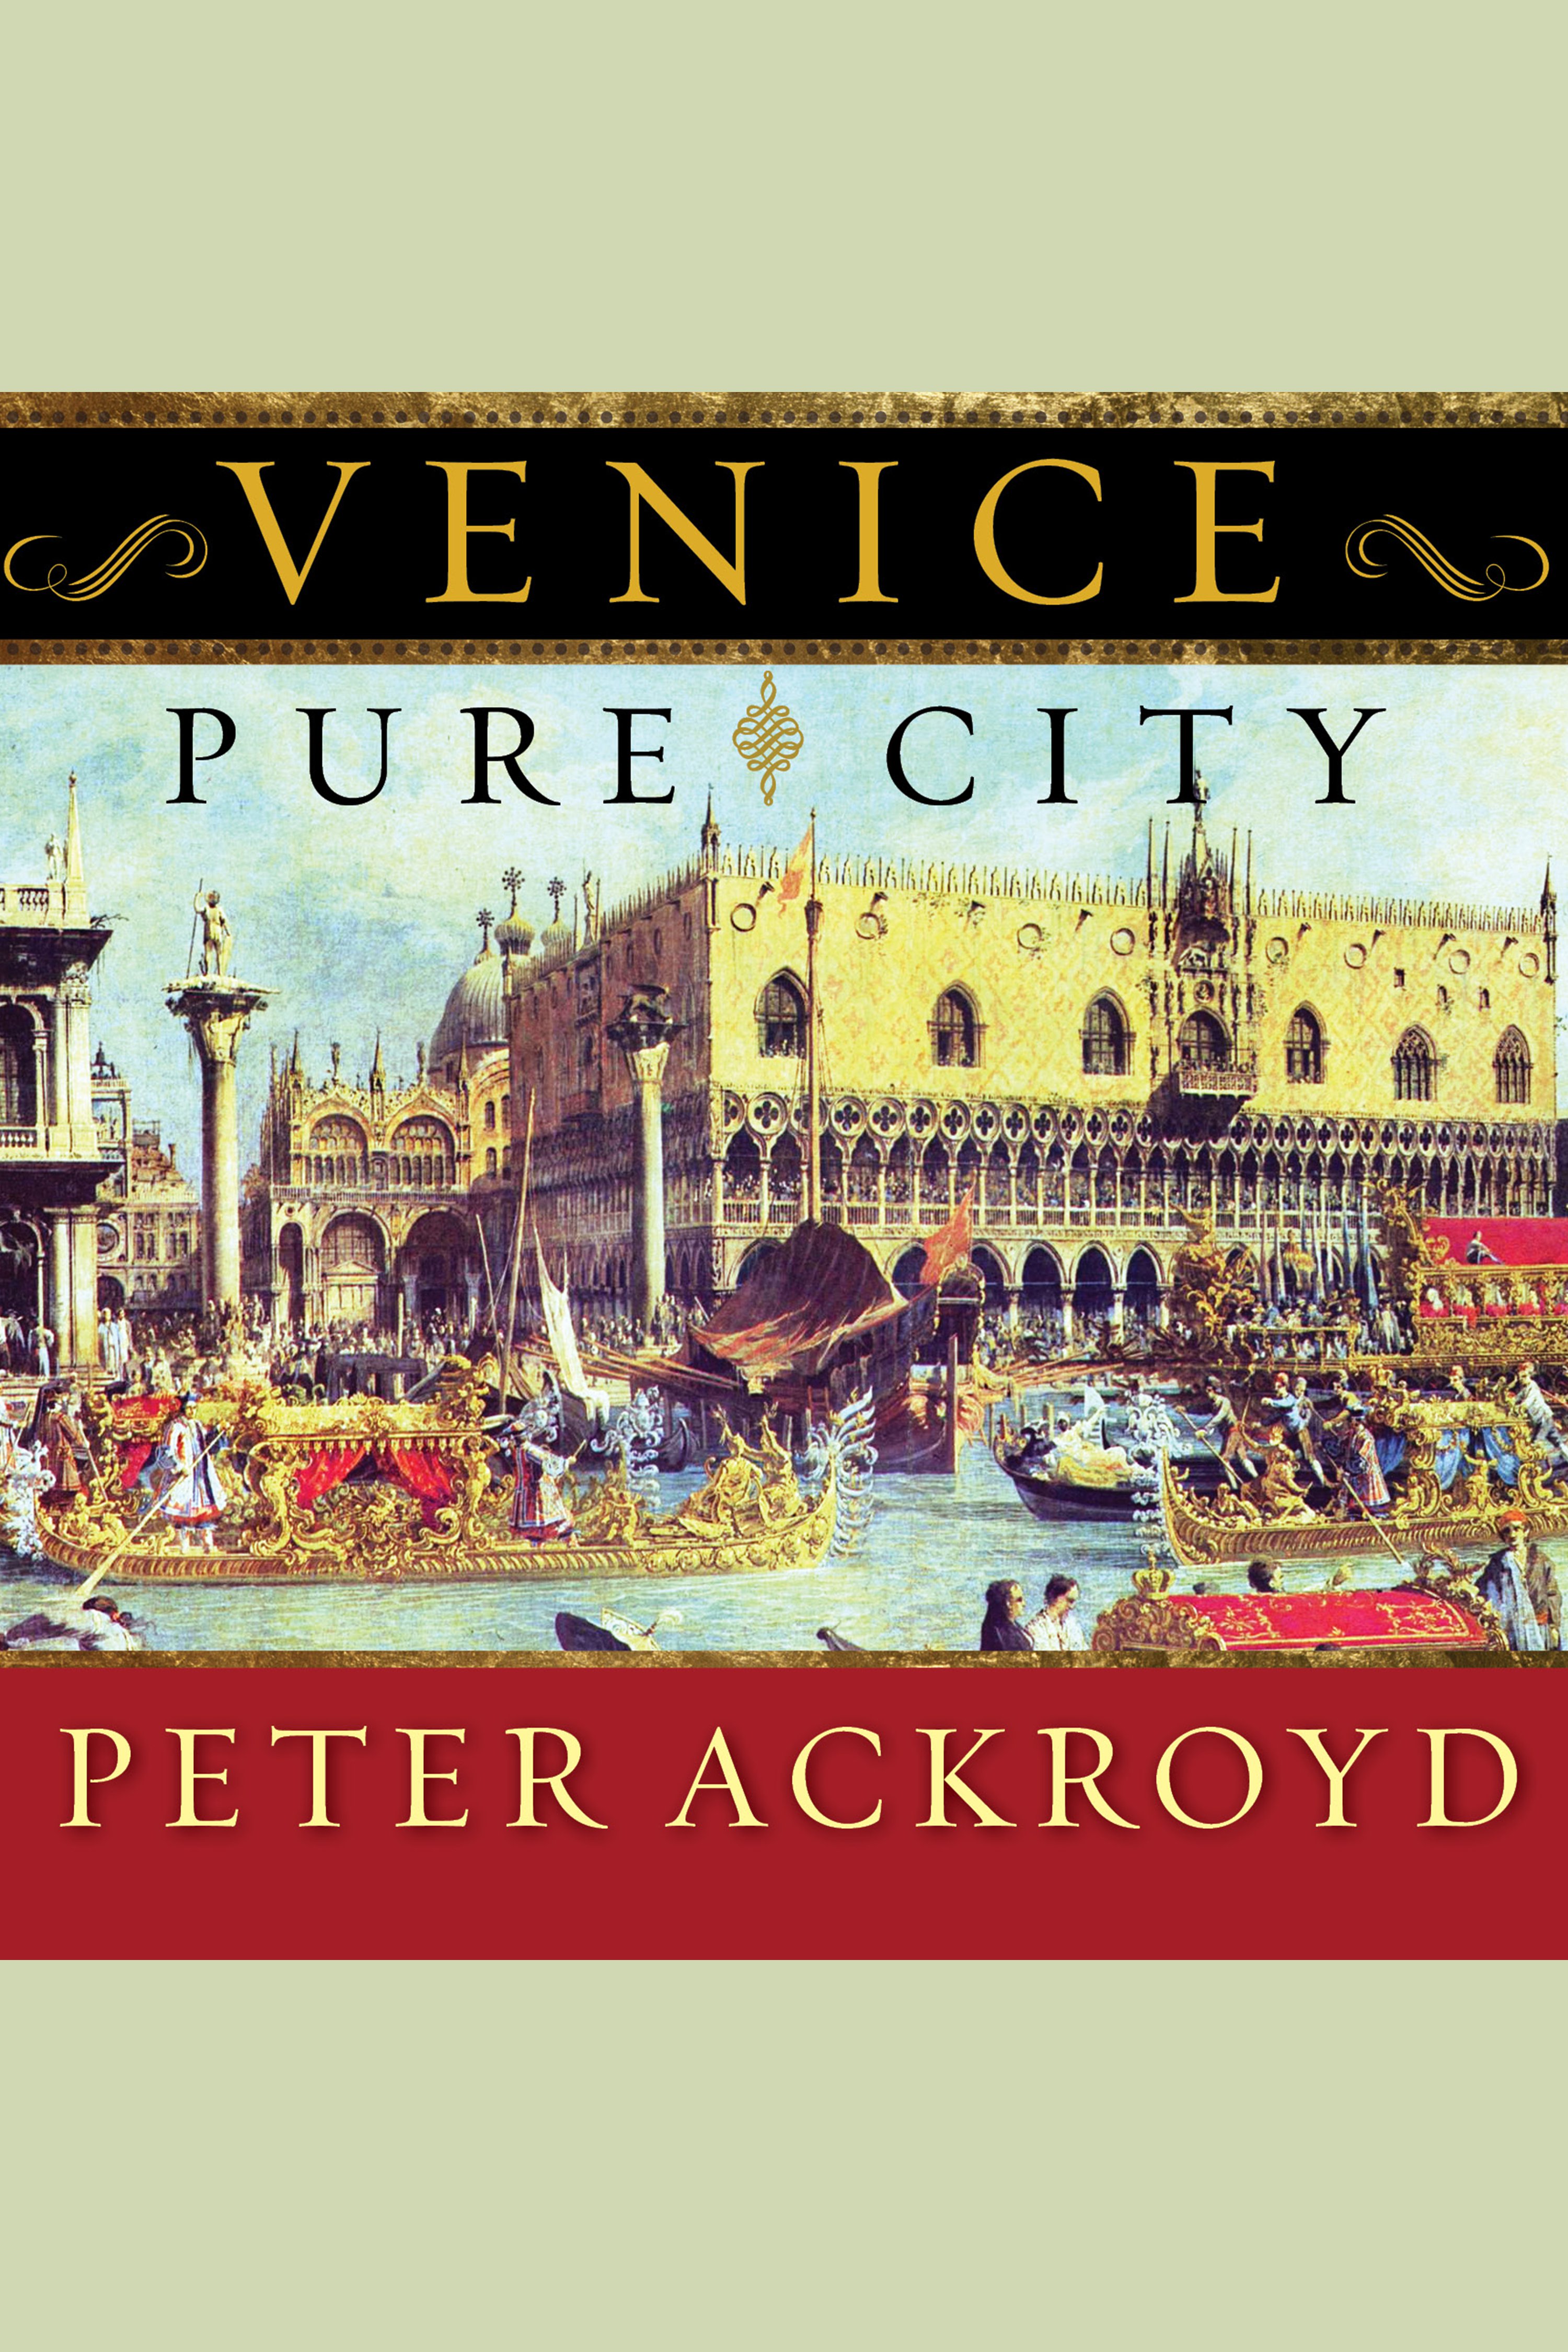 Venice pure city cover image